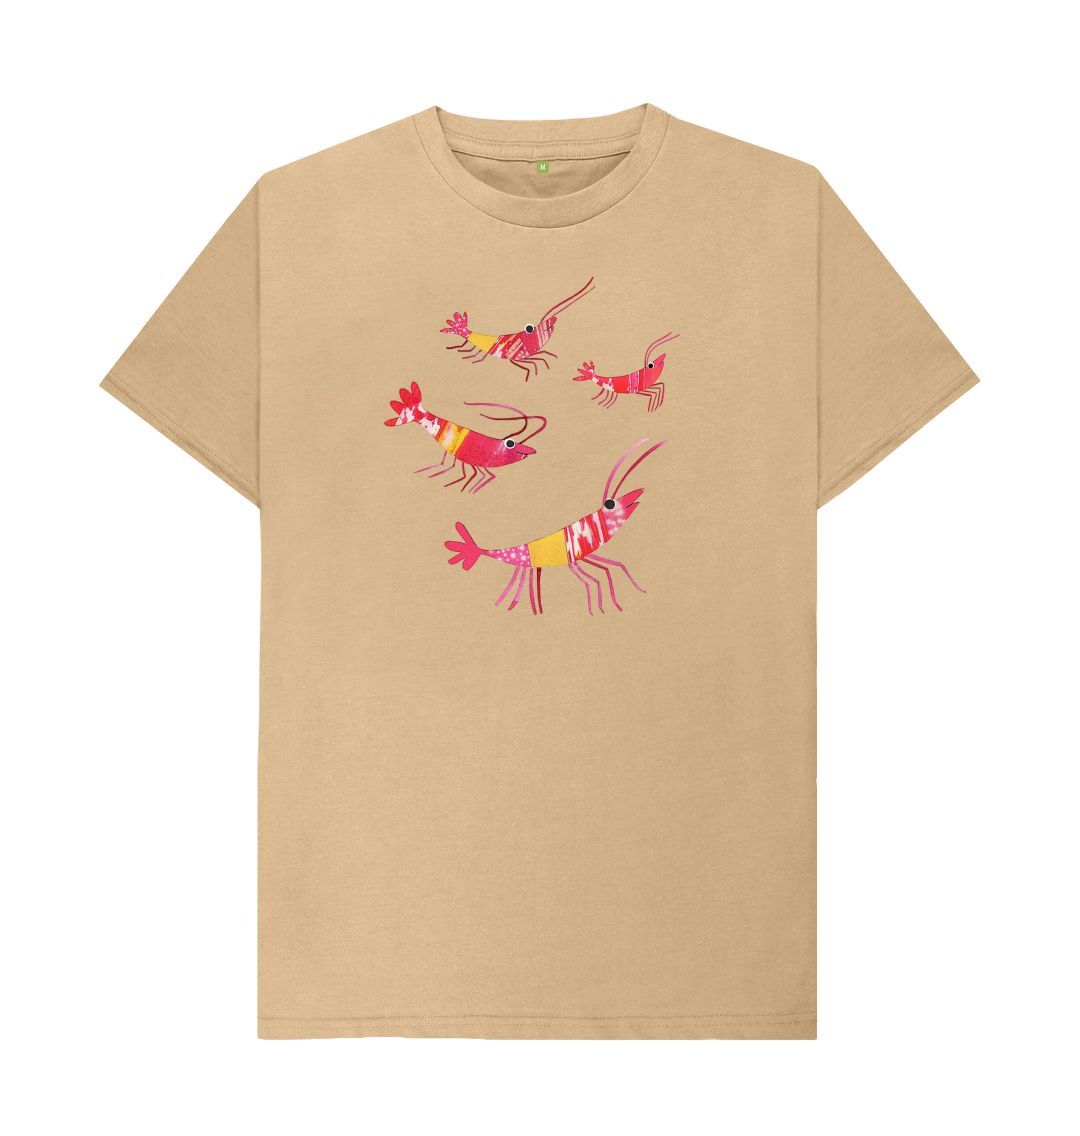 prawn party organic men's tee - Printed T-shirt - Sarah Millin